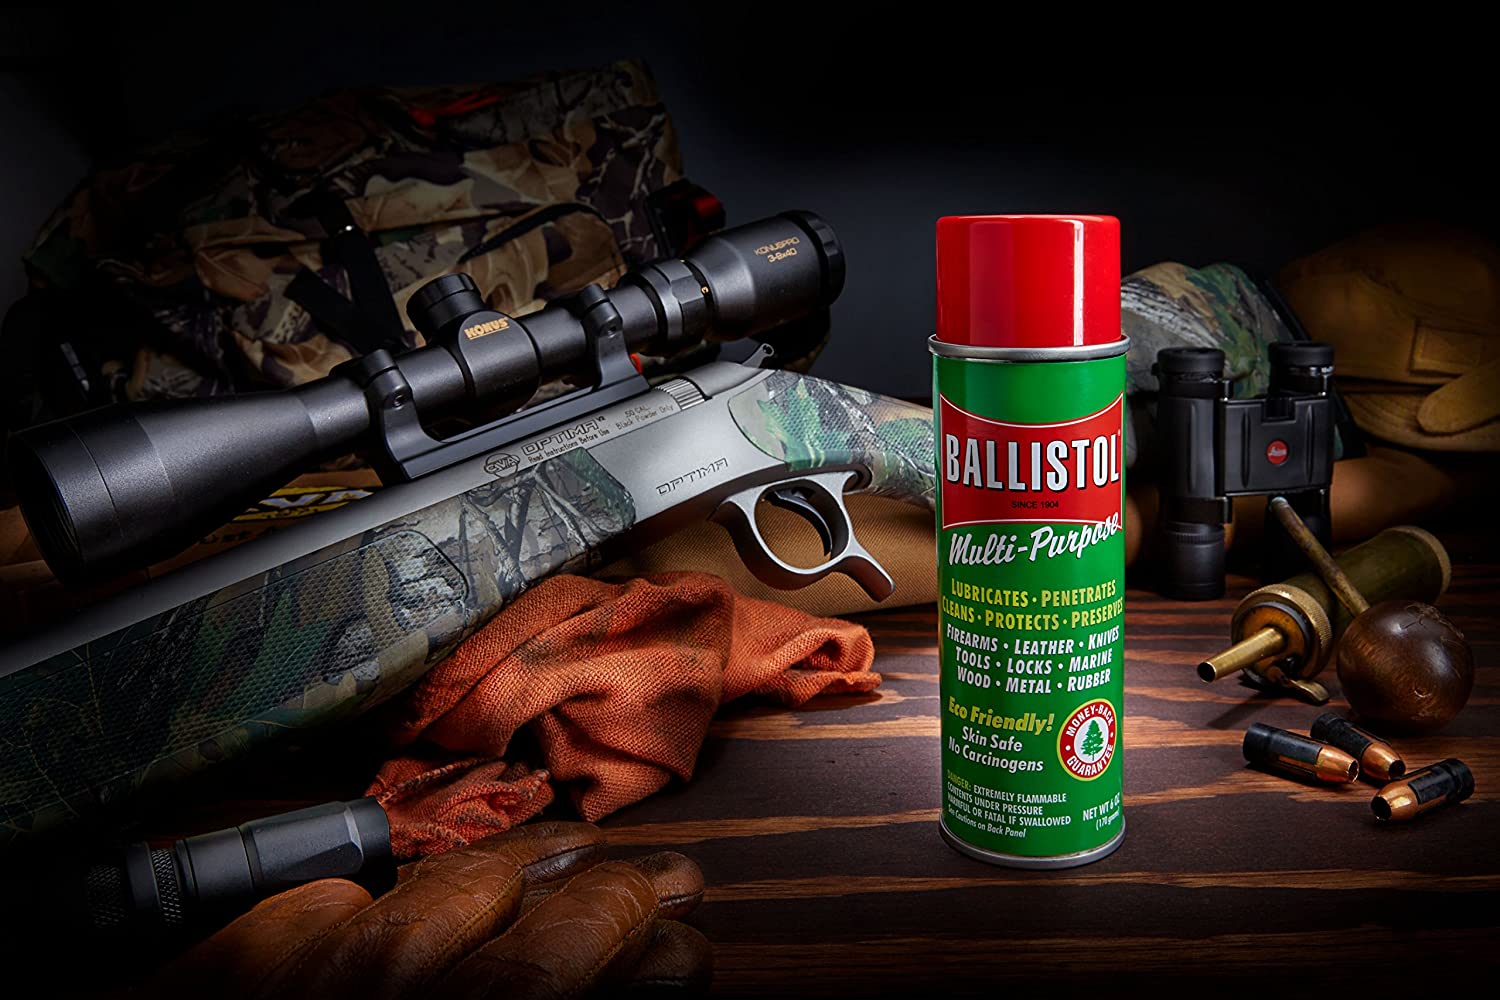 Ballistol 2x 16 oz Multi-Purpose Oil Lubricant Cleaner Protectant and 2x 6oz Aerosol Spray with 2x Trigger Spray - Pro-Distributing